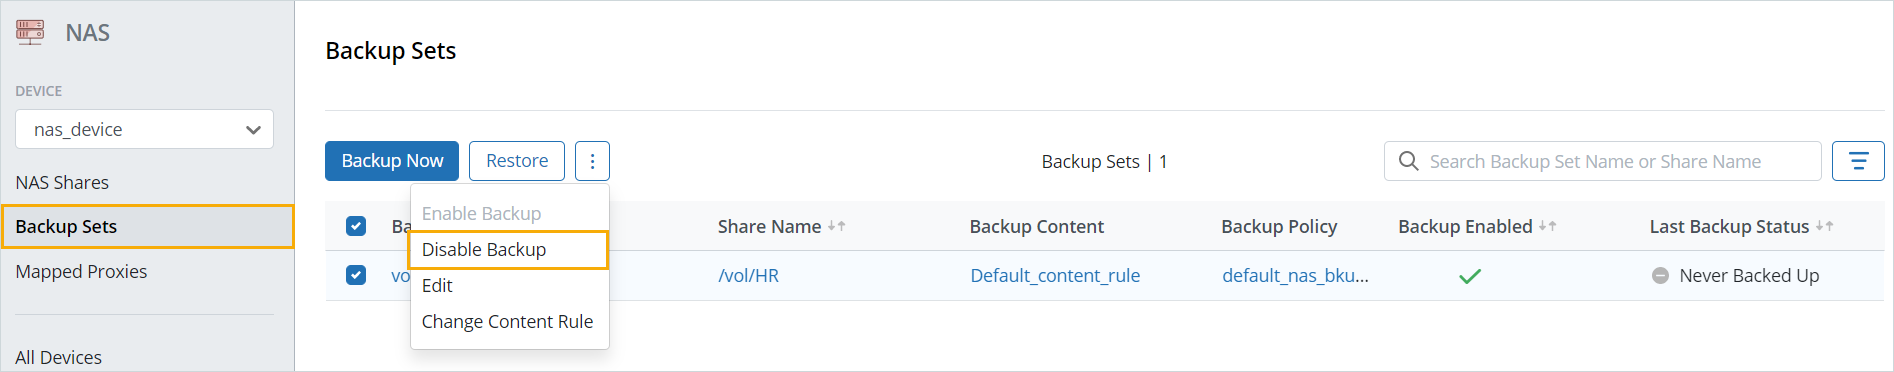 Disable Backup - Backup Sets page.png